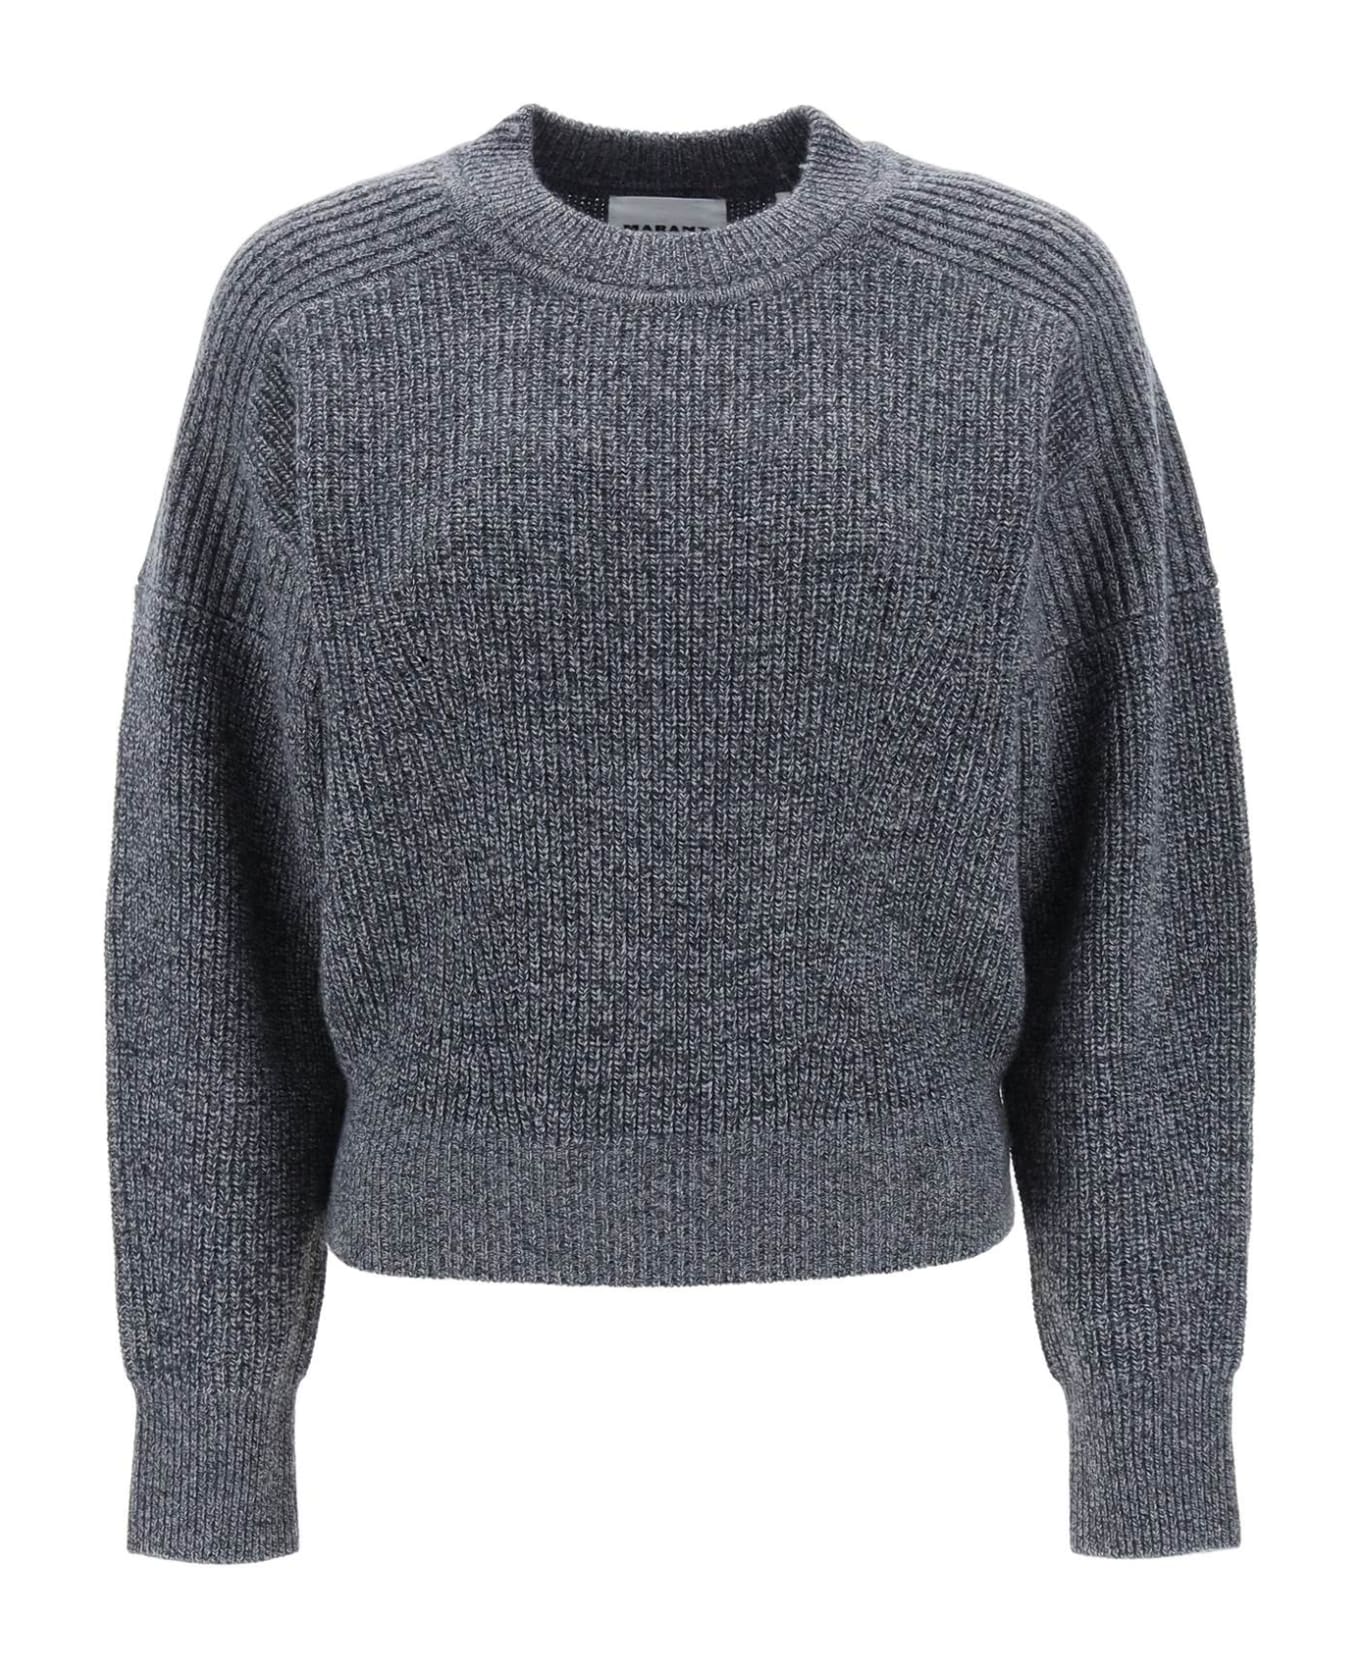 Marant Étoile Blow Merino Wool Sweater - ANTHRACITE (Grey)